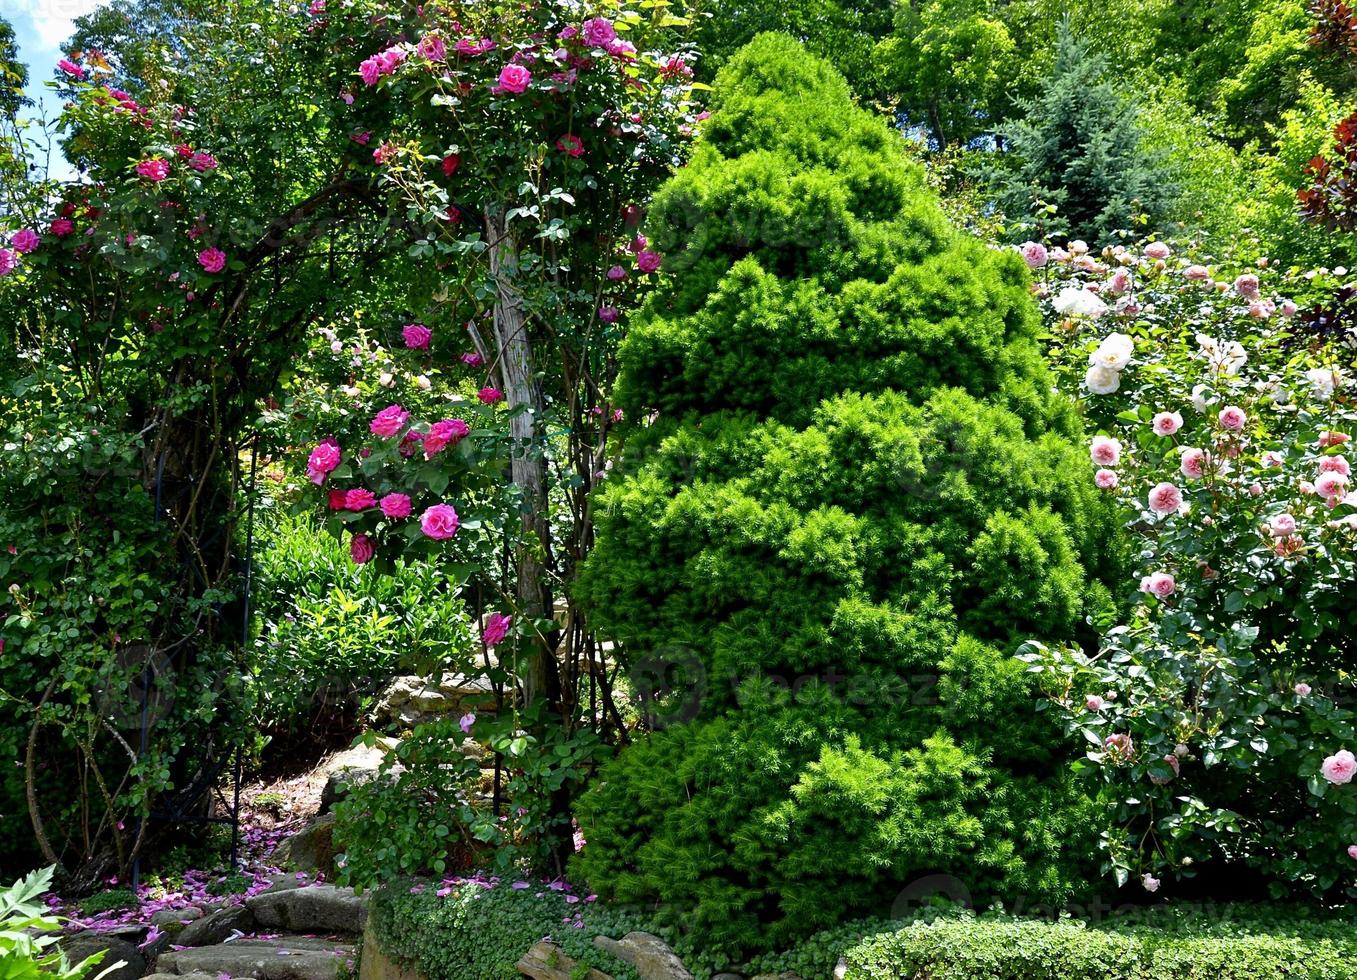 Beautiful climbing roses in a scenic garden photo